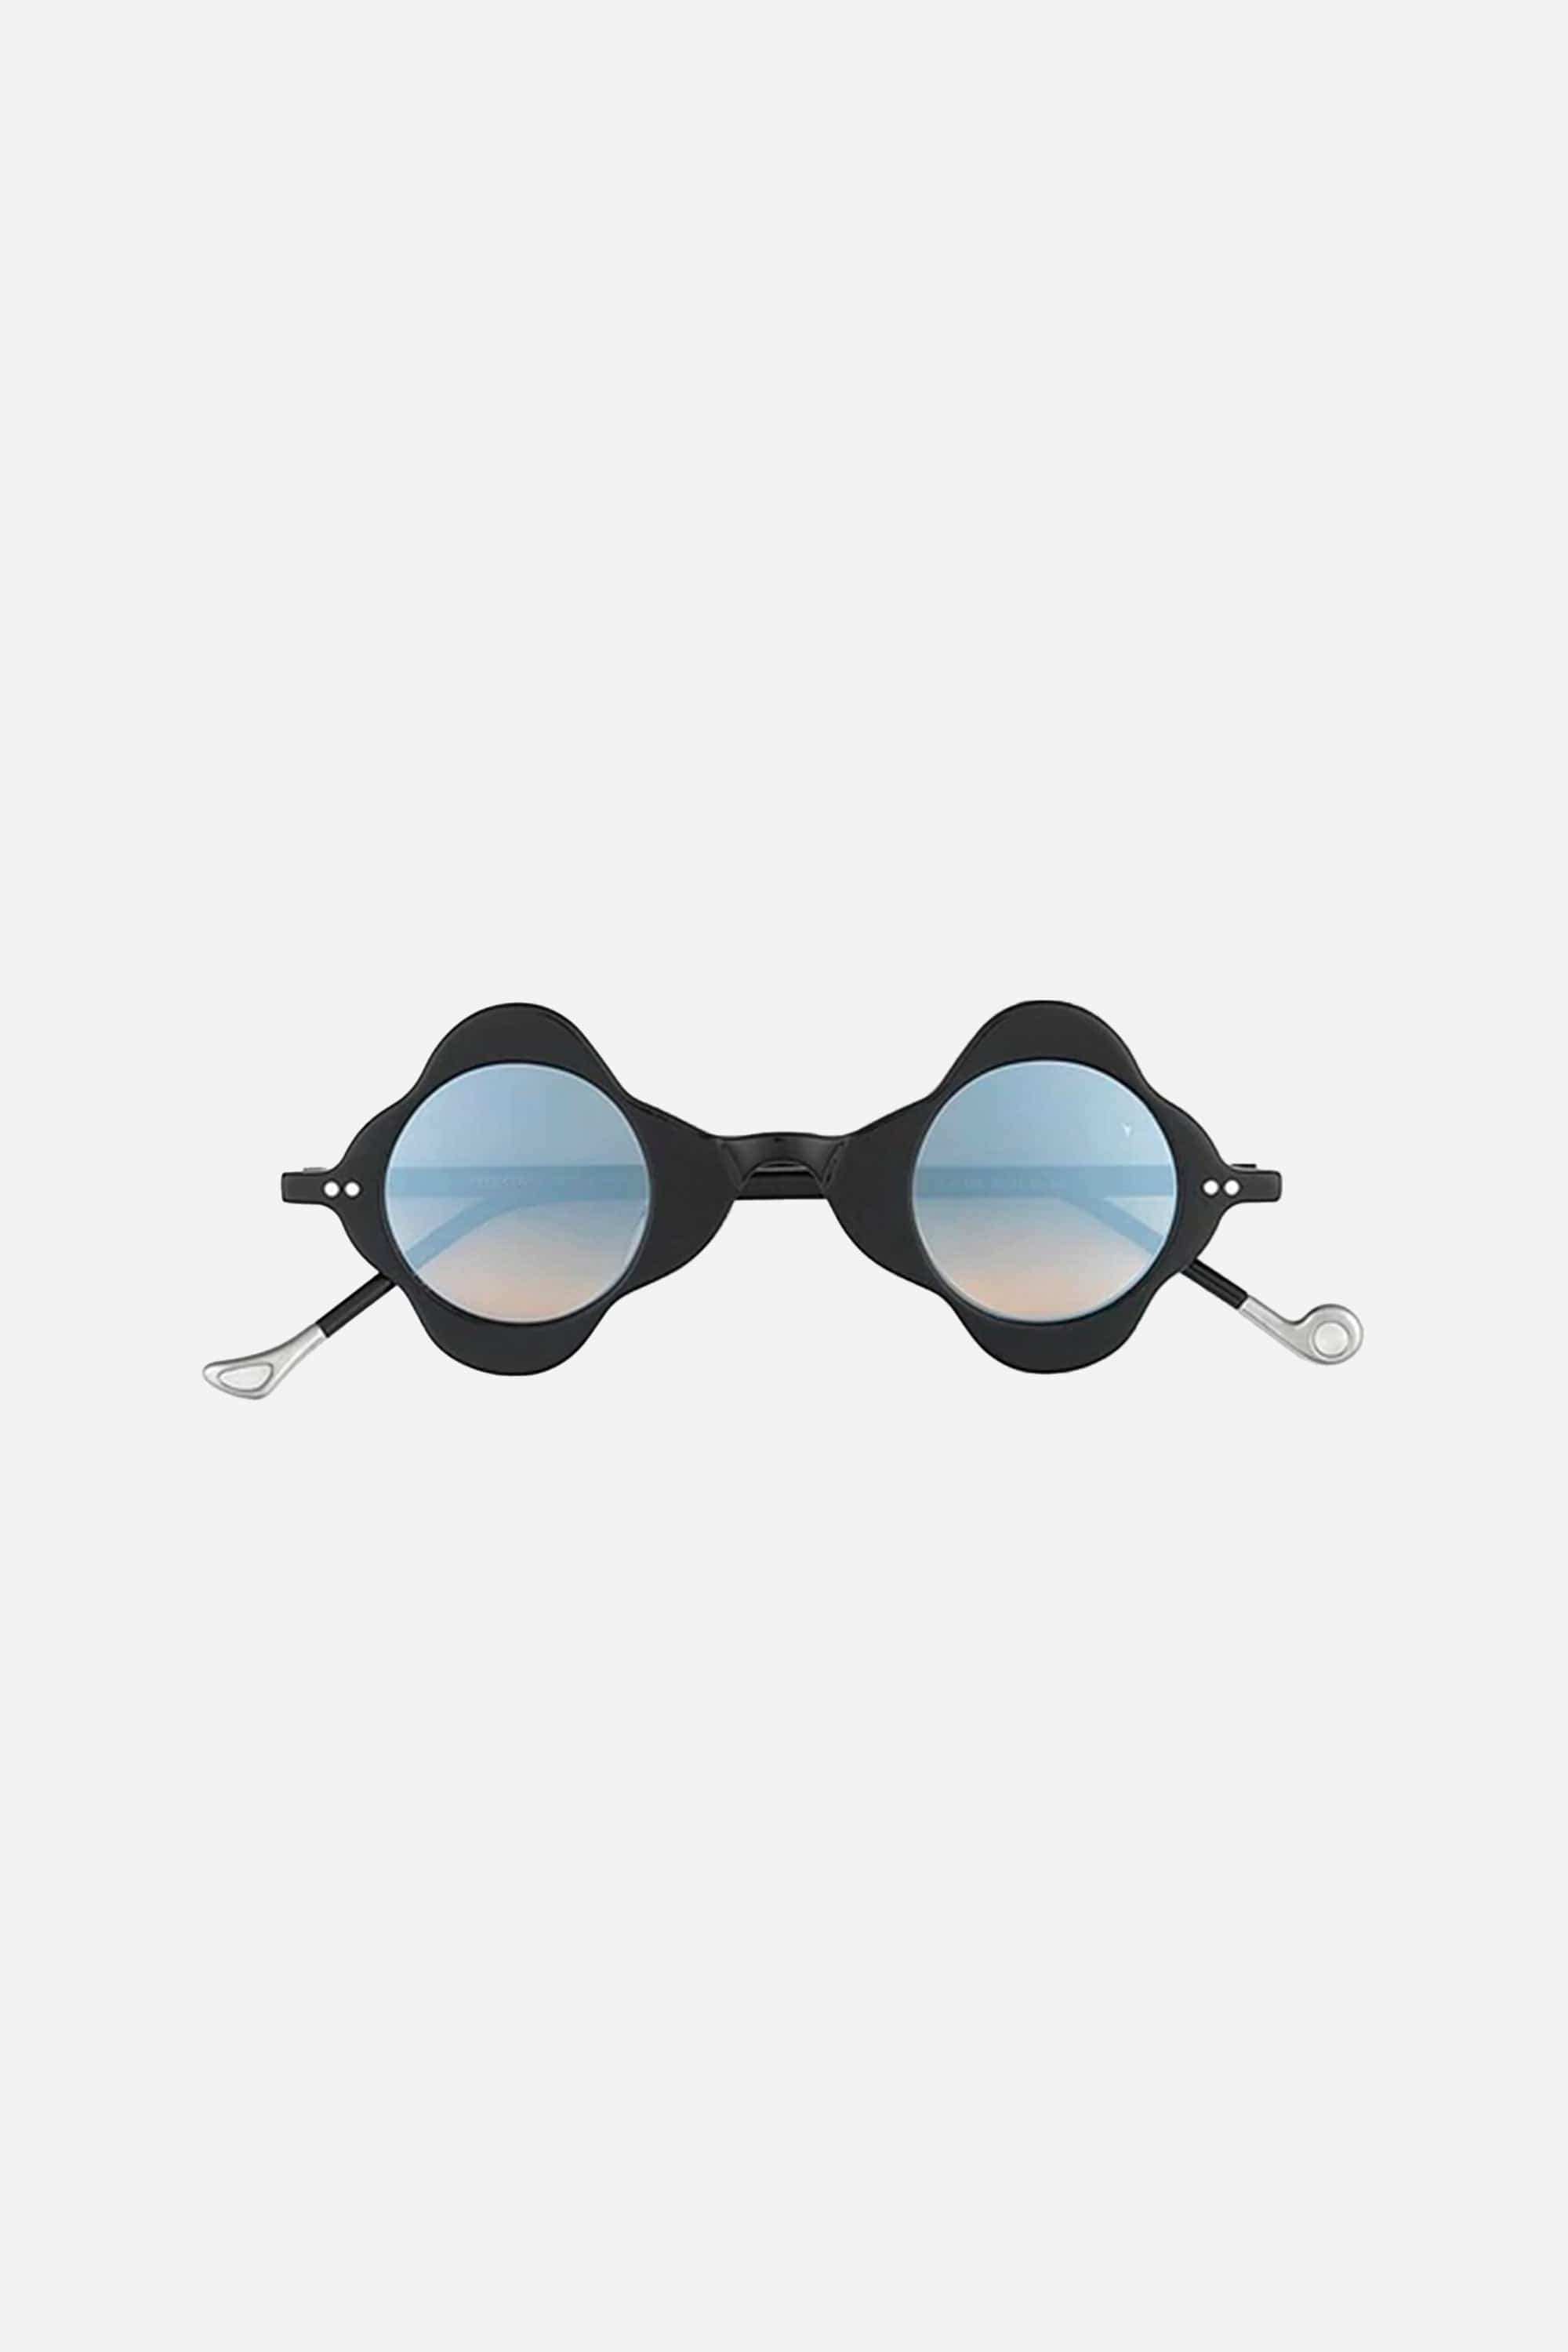 Eyepetizer black diciotto sunglasses - Eyewear Club